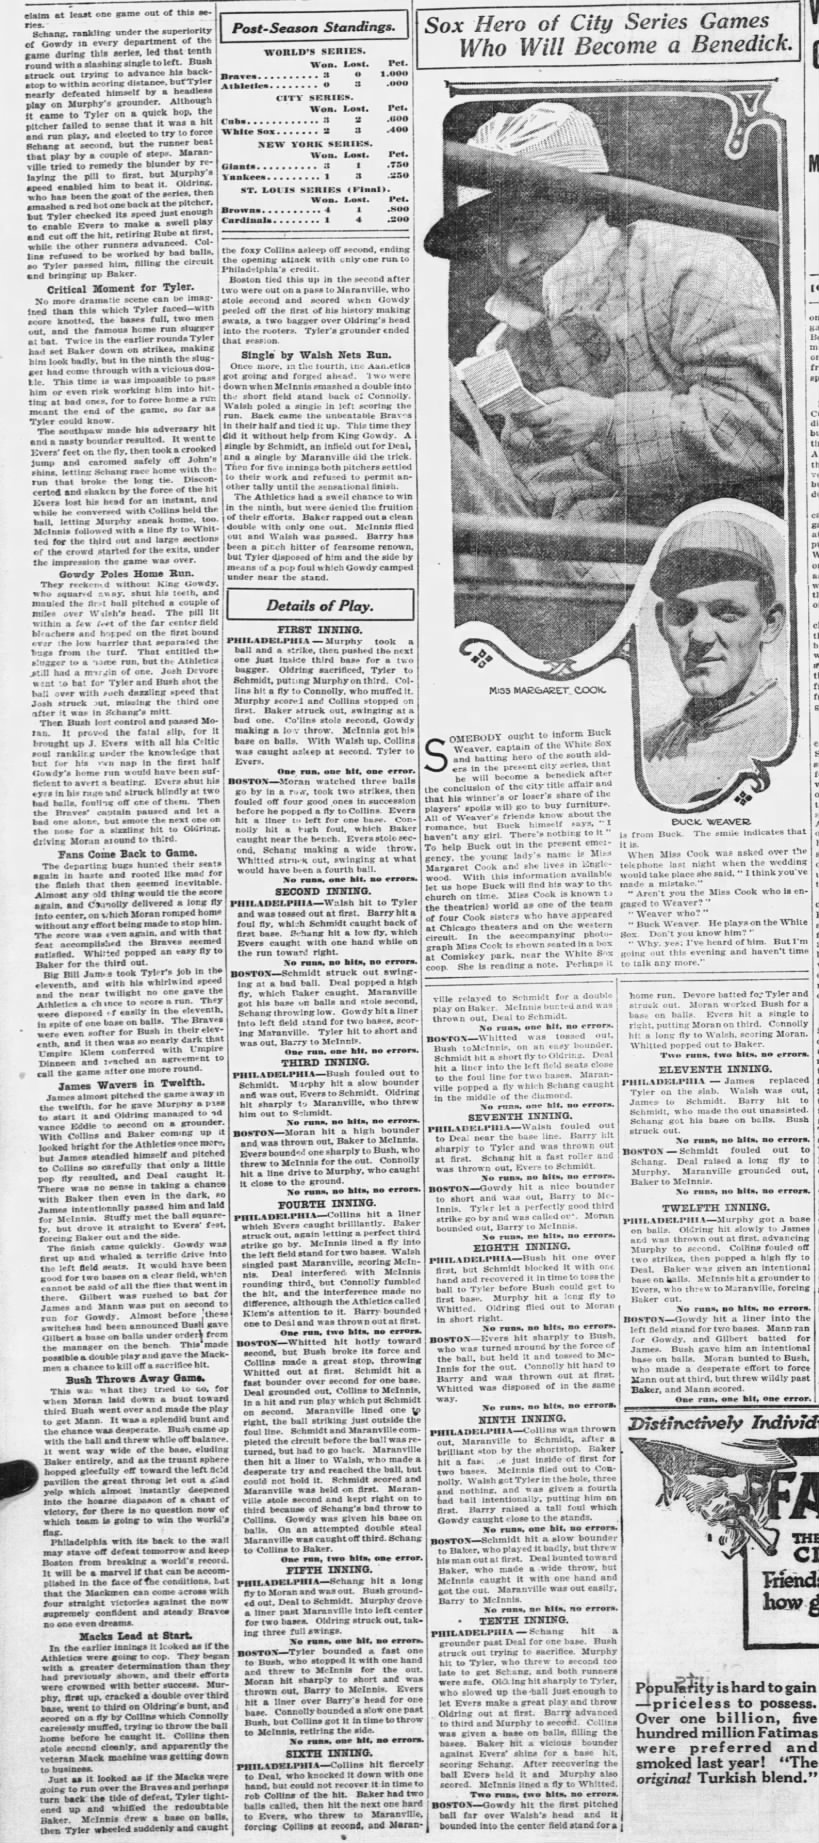 1914 World Series Game 3 Part 2